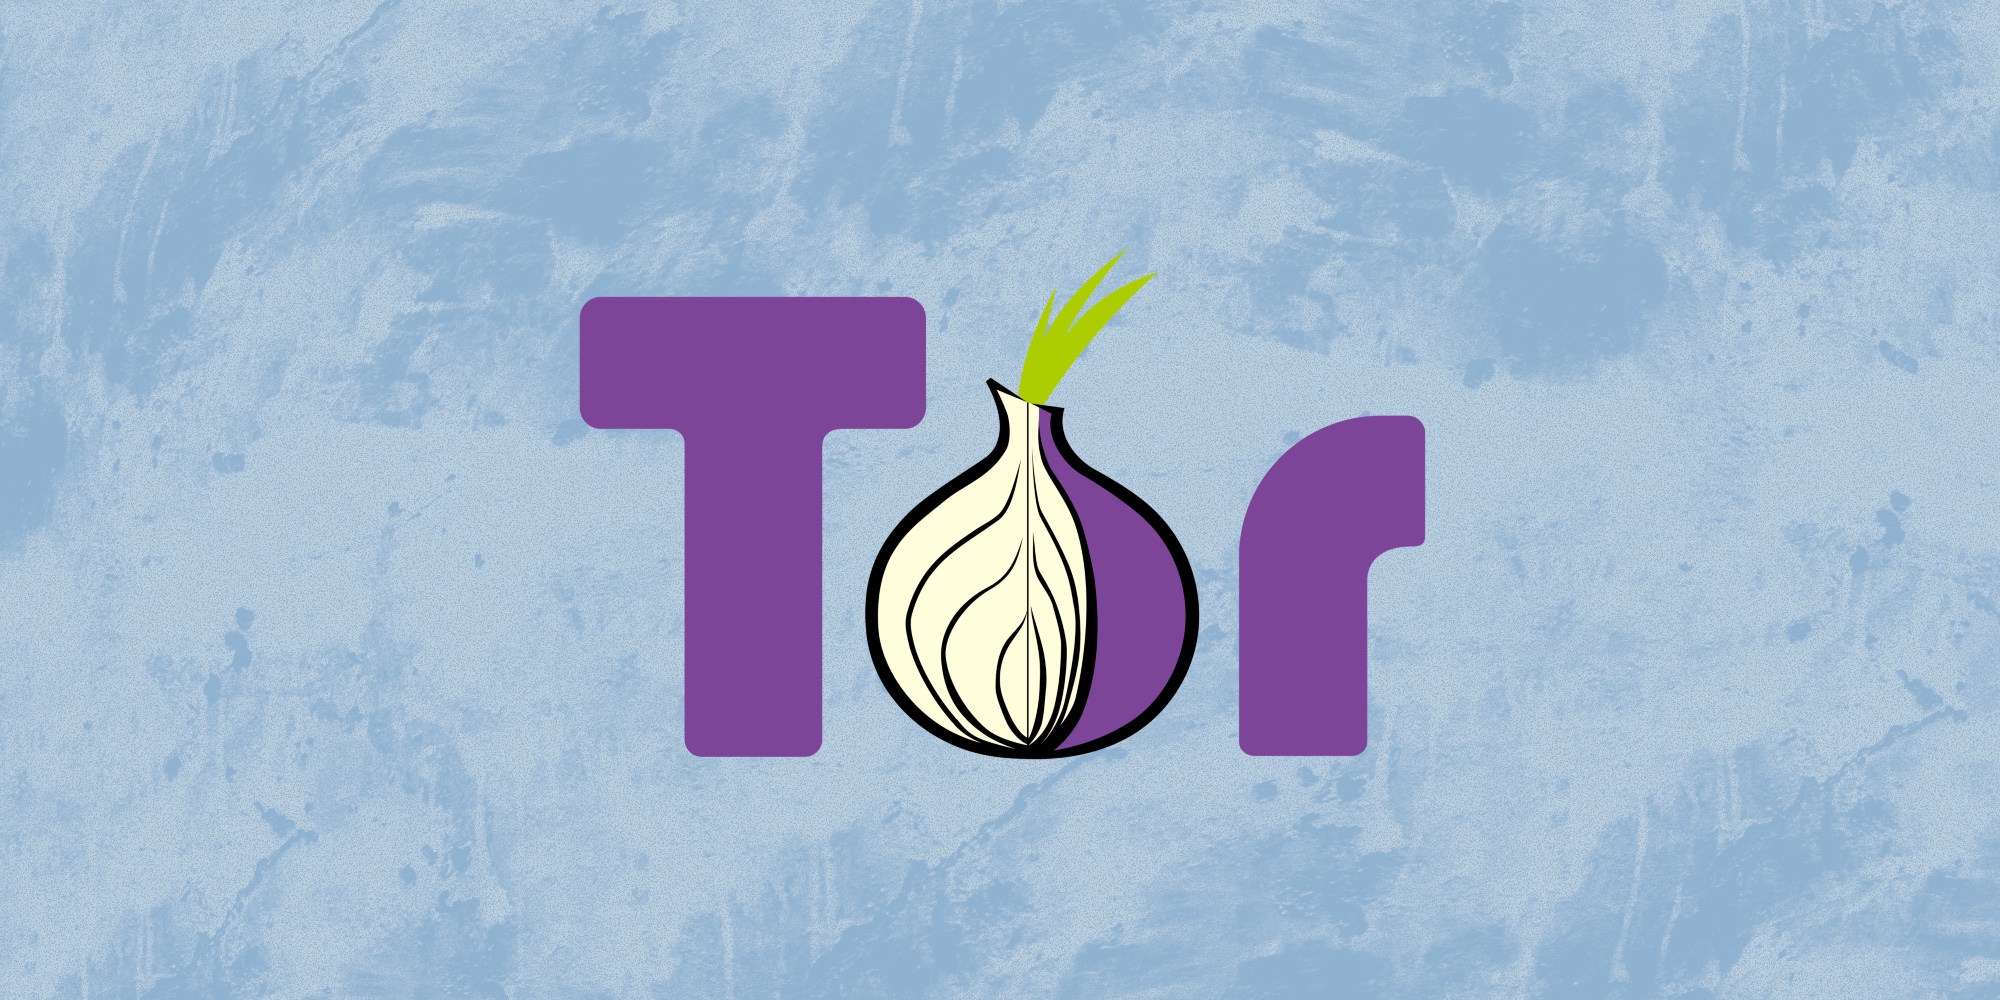 Tor